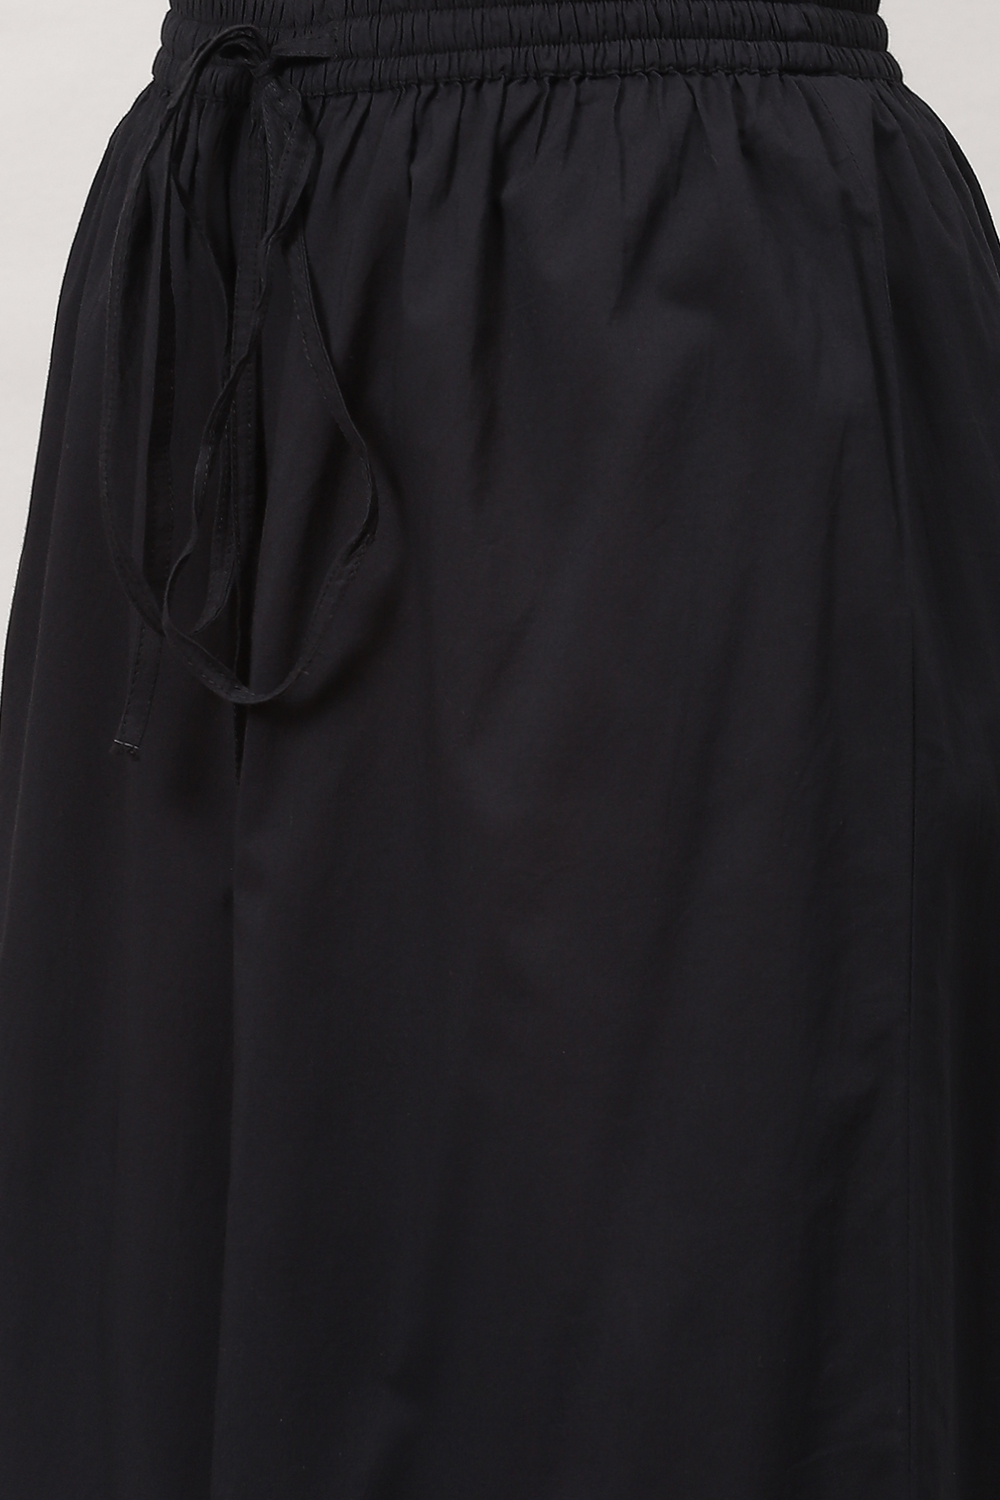 Rohit Bal Black Silk & Cotton Straight Kurta Suit Set image number 2